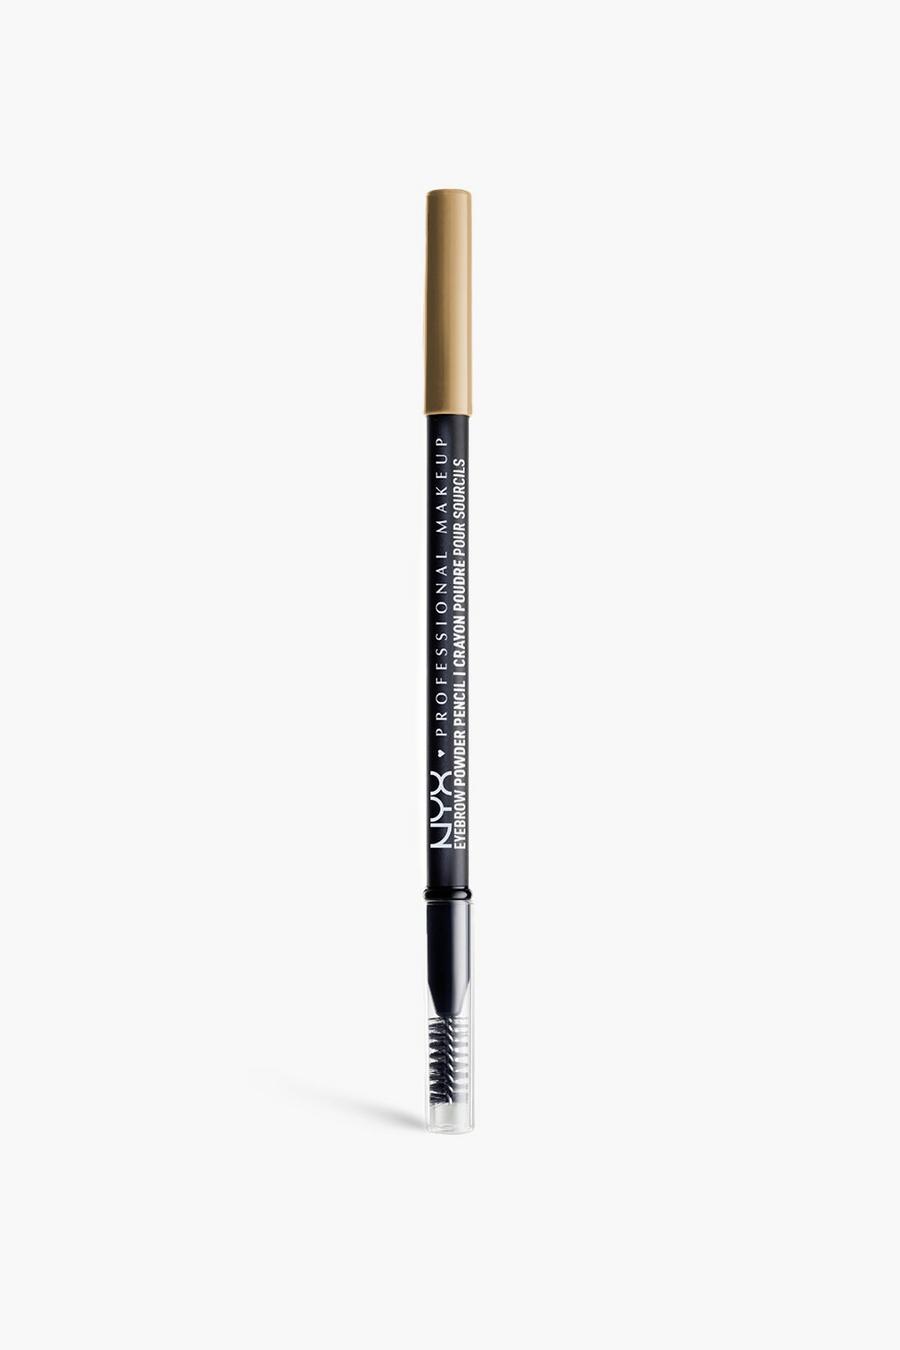 01 blonde NYX Professional Makeup Eyebrow Powder Pencil